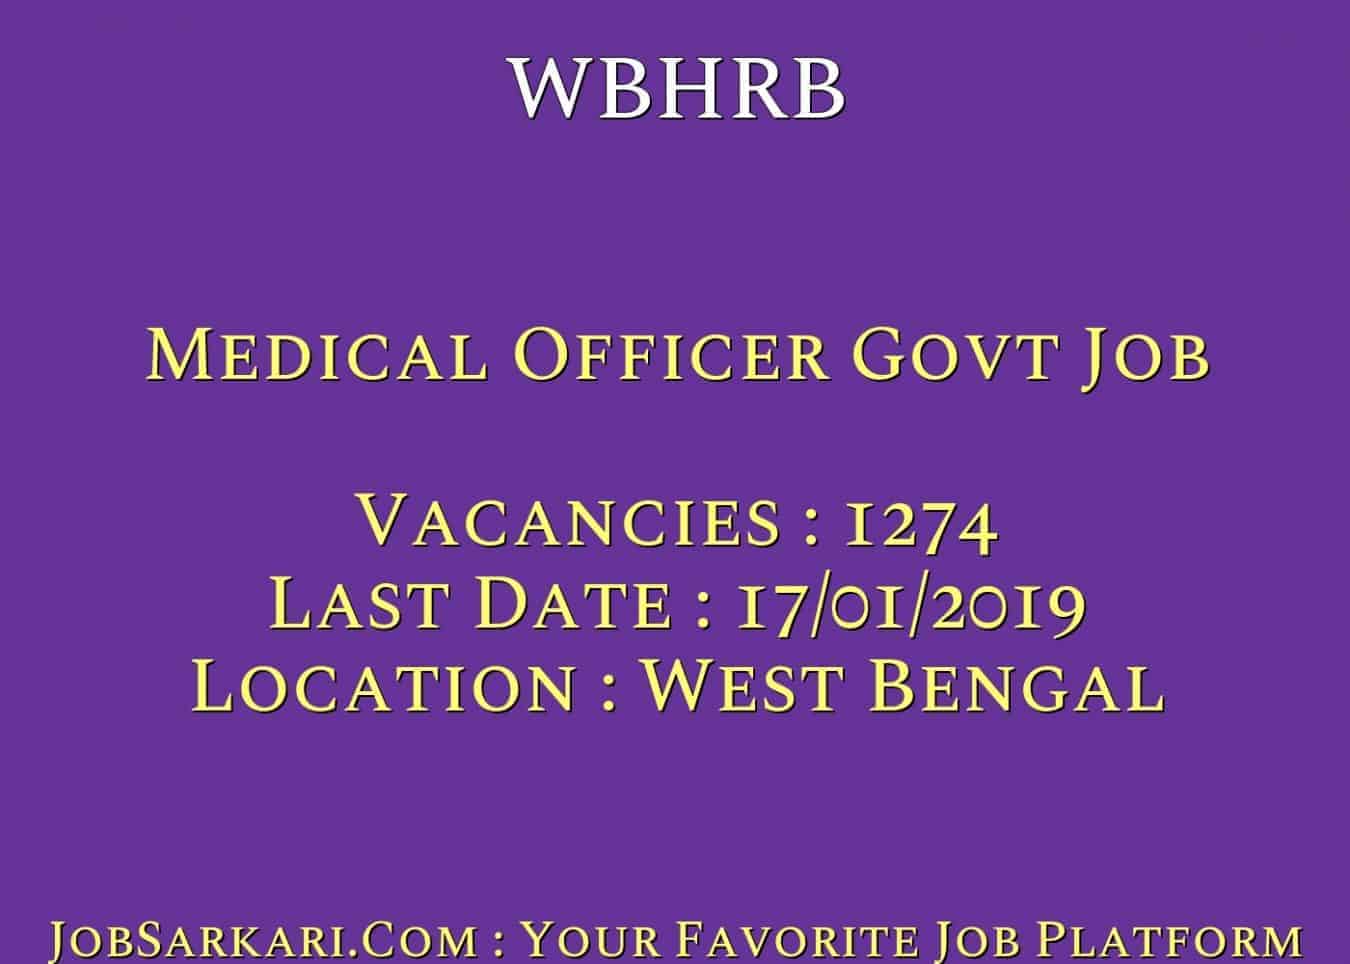 WBHRB Recruitment 2019 For Medical Officer Govt Job